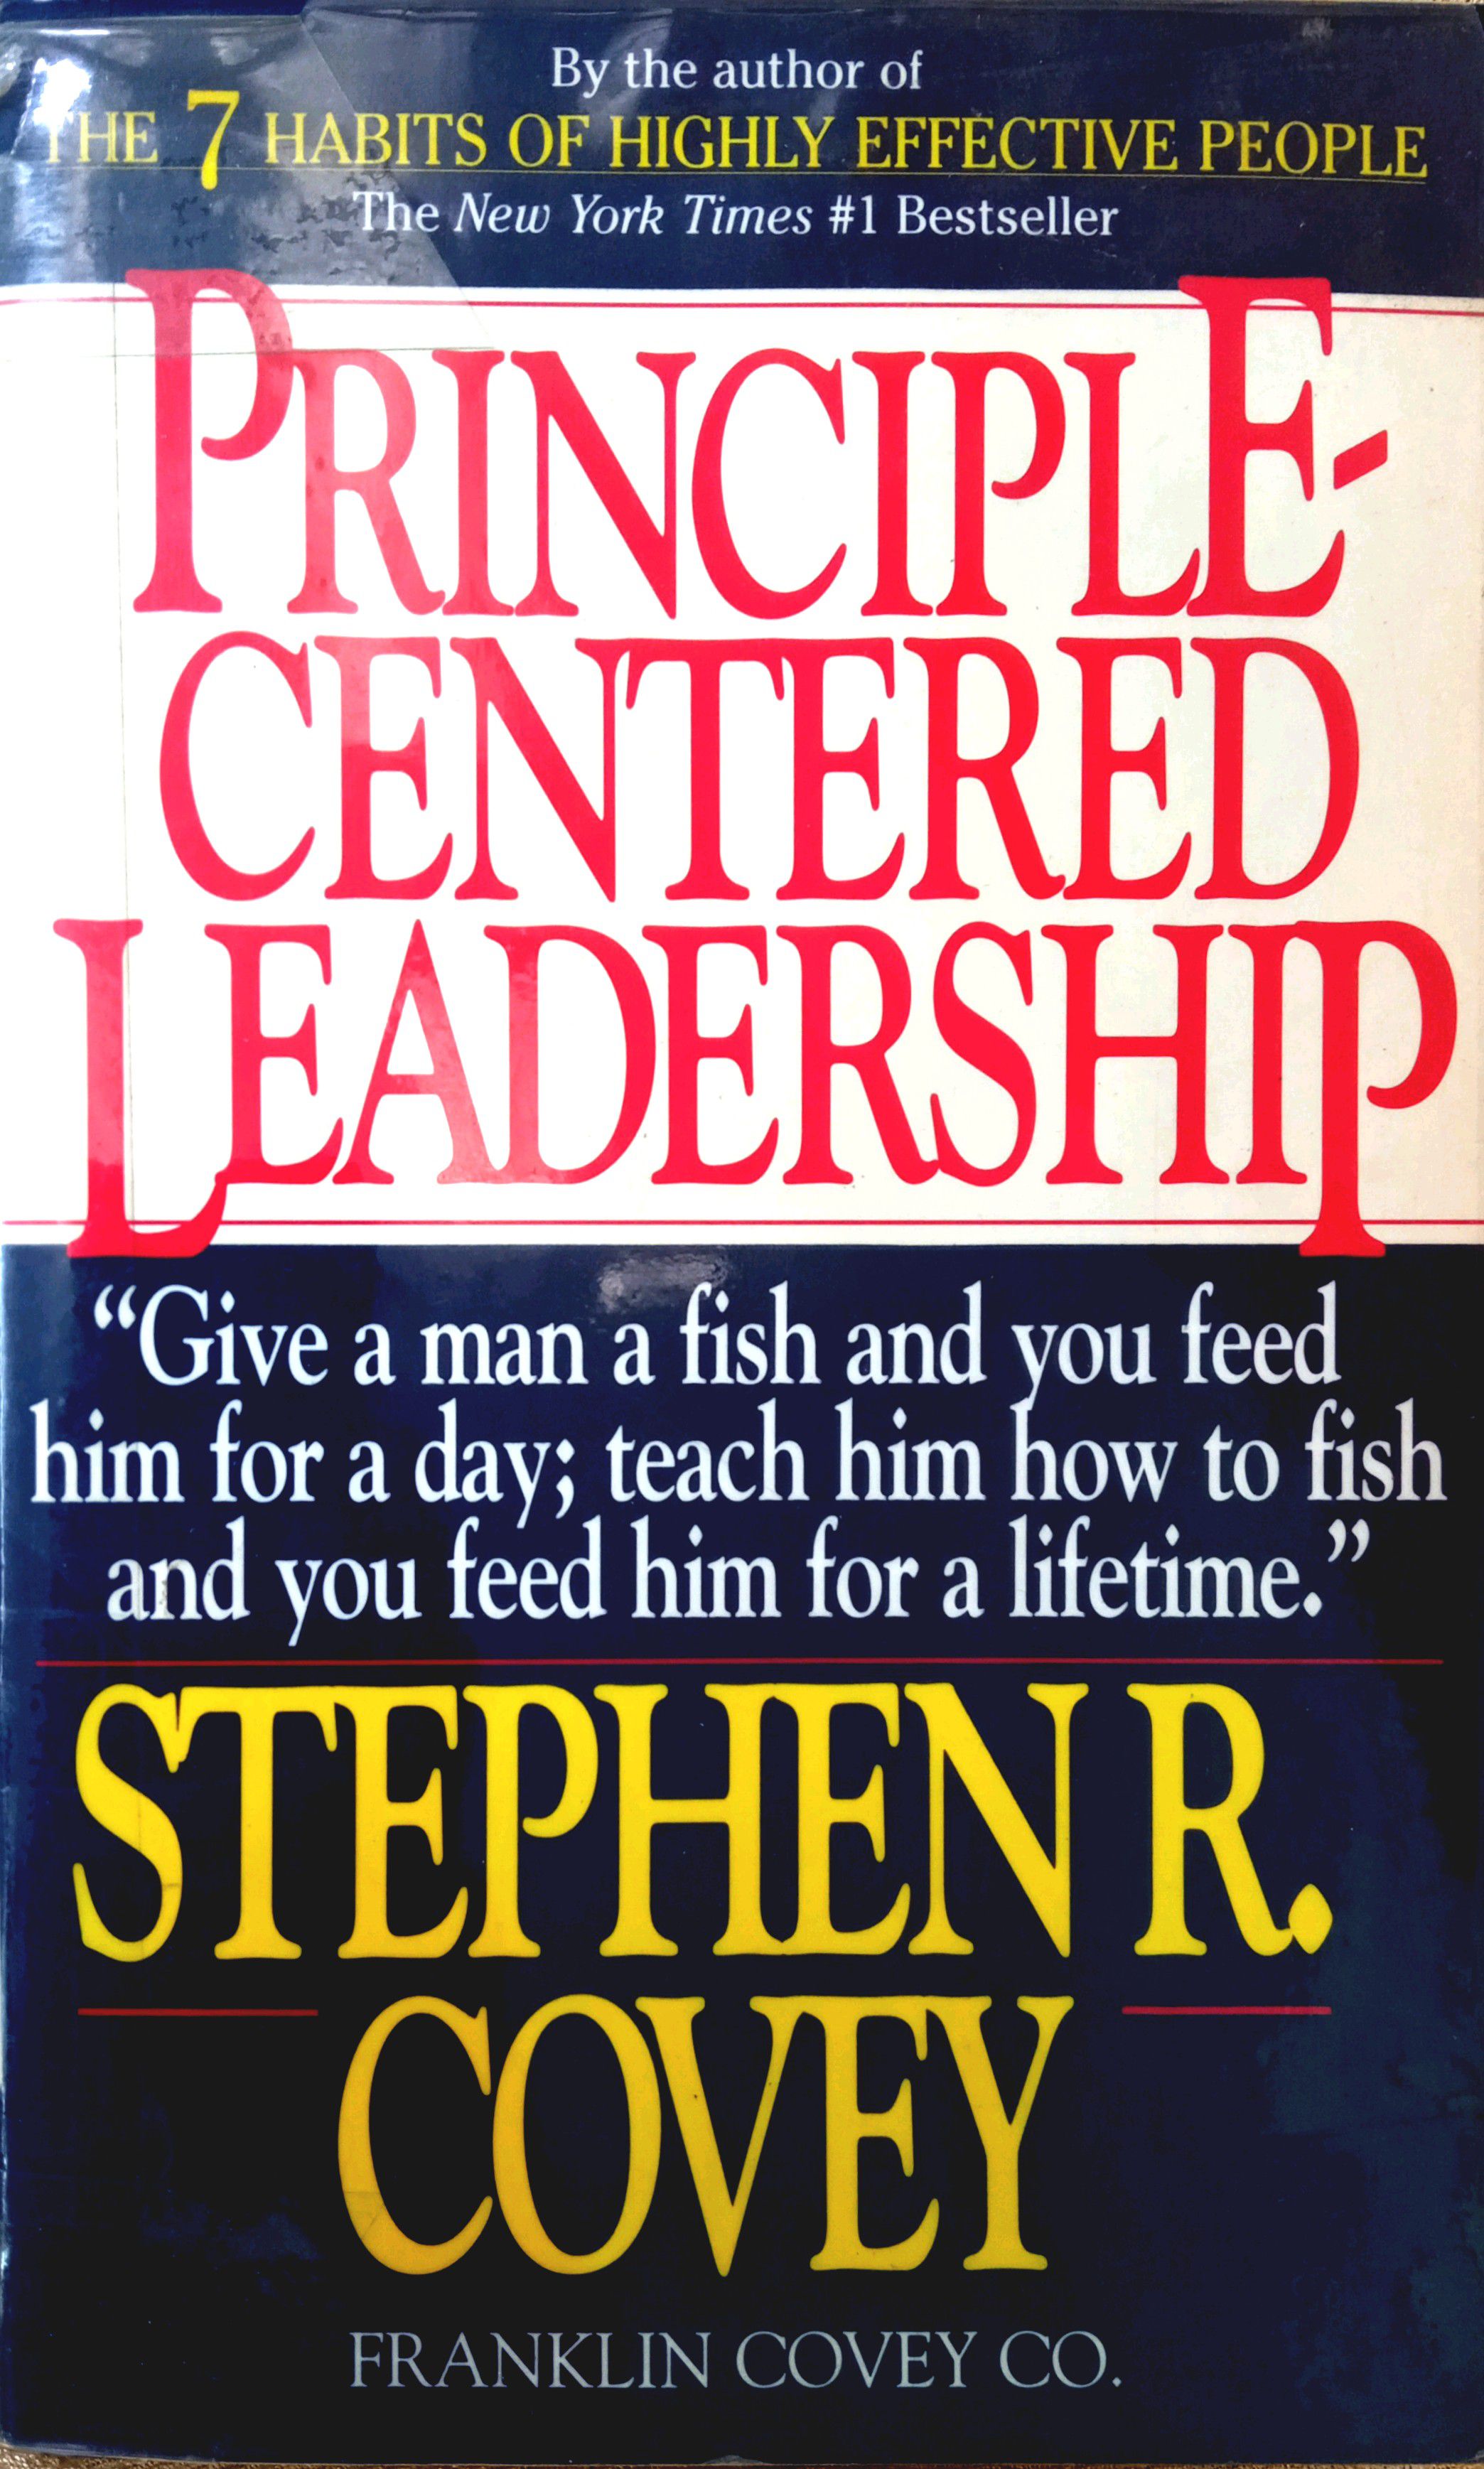 PRINCIPLE-CENTERED LEADERSHIP